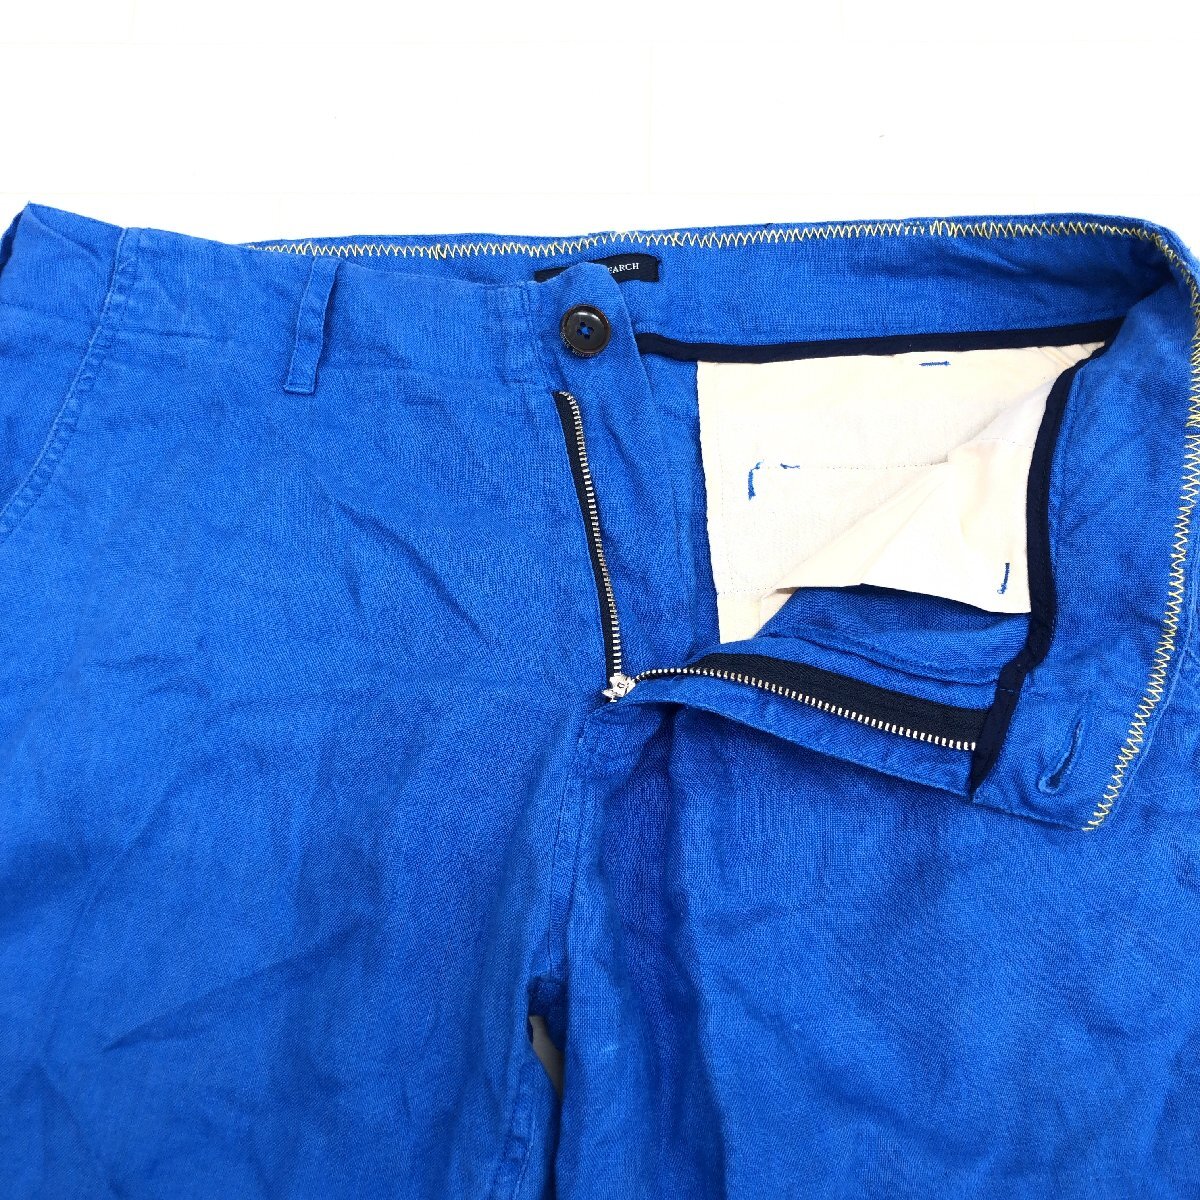 URBAN RESEARCH アーバンリサーチ 麻 リネン100% クロップド パンツ 40(L) 青 ブルー スラックス カジュアル 国内正規品 メンズ 紳士_画像5